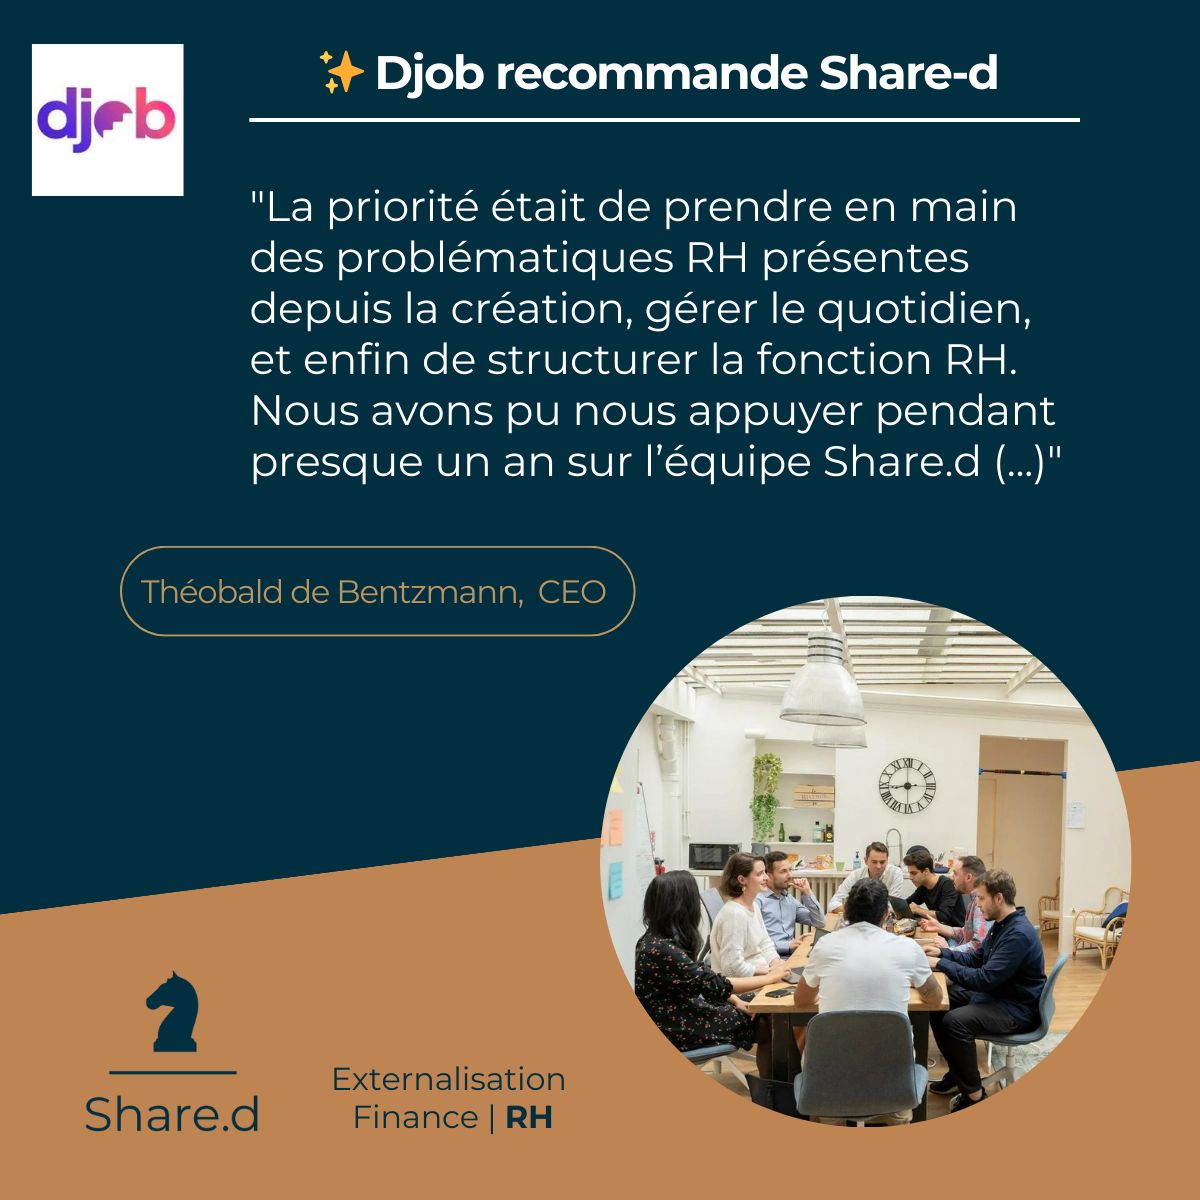 Share.d on LinkedIn: ✨ Success ✨ Djob recommande Share-d 👌   👉 Management de transition…